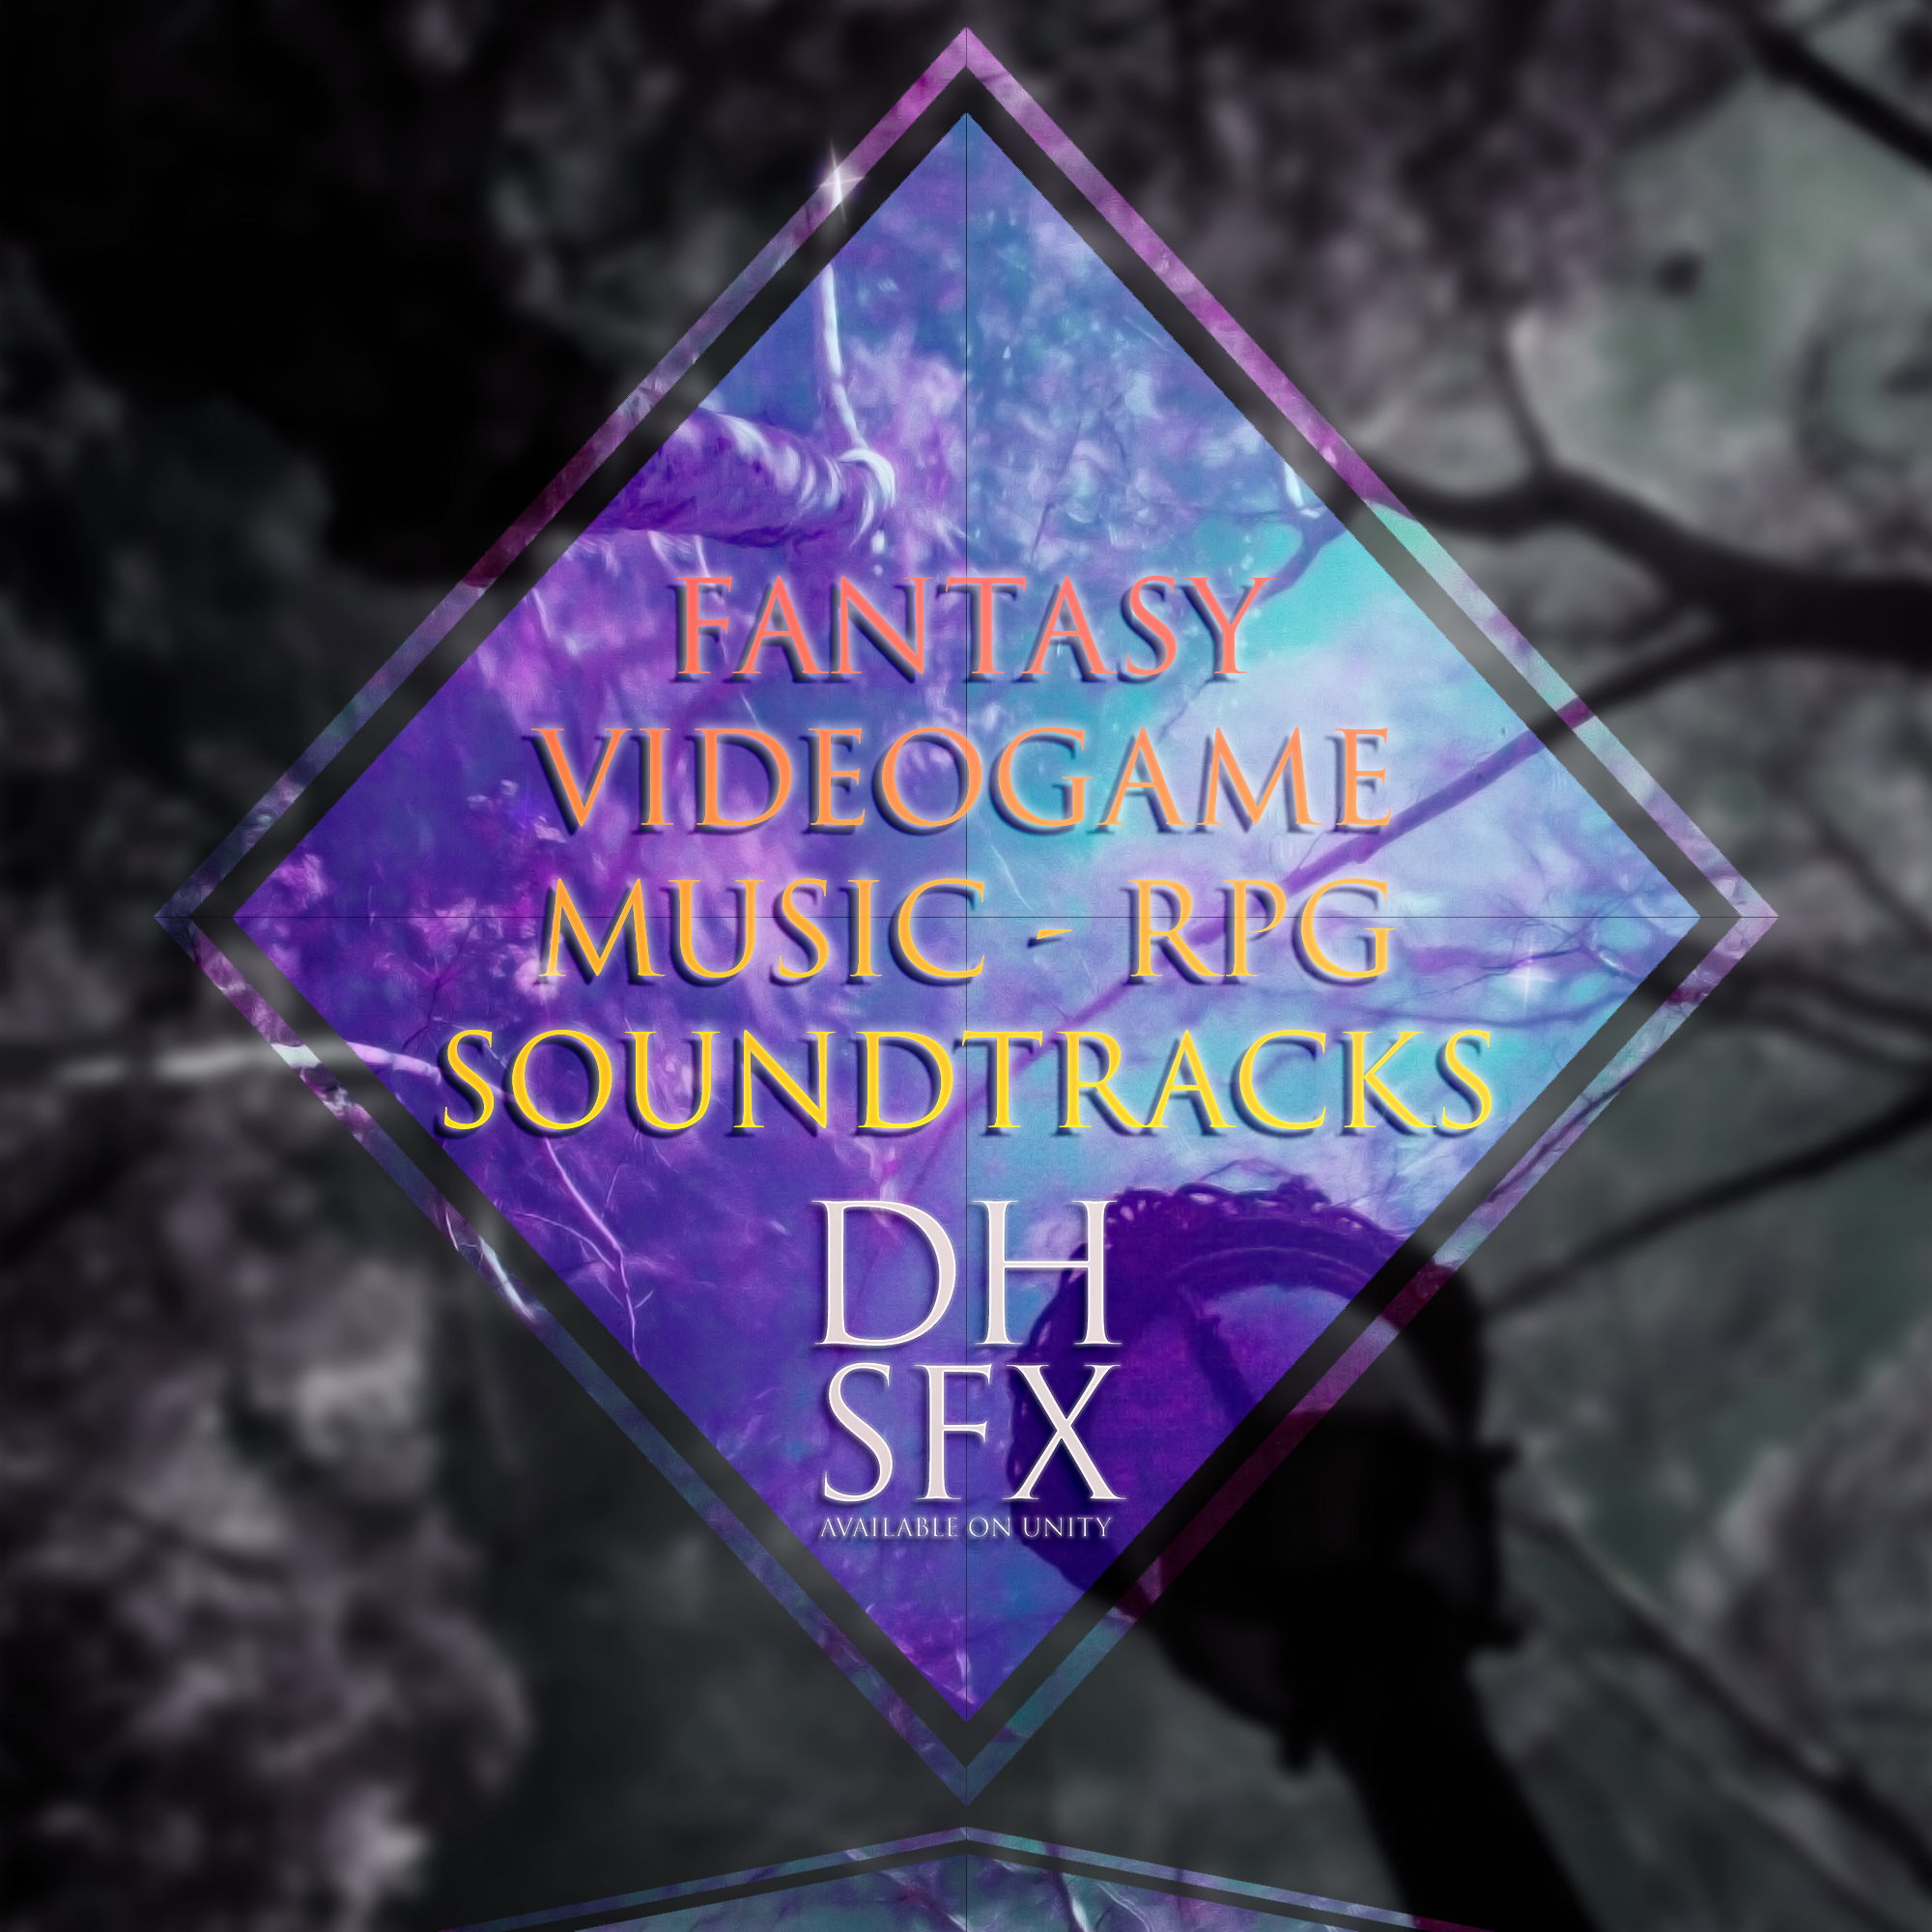 Fantasy Videogame Music - RPG Soundtracks